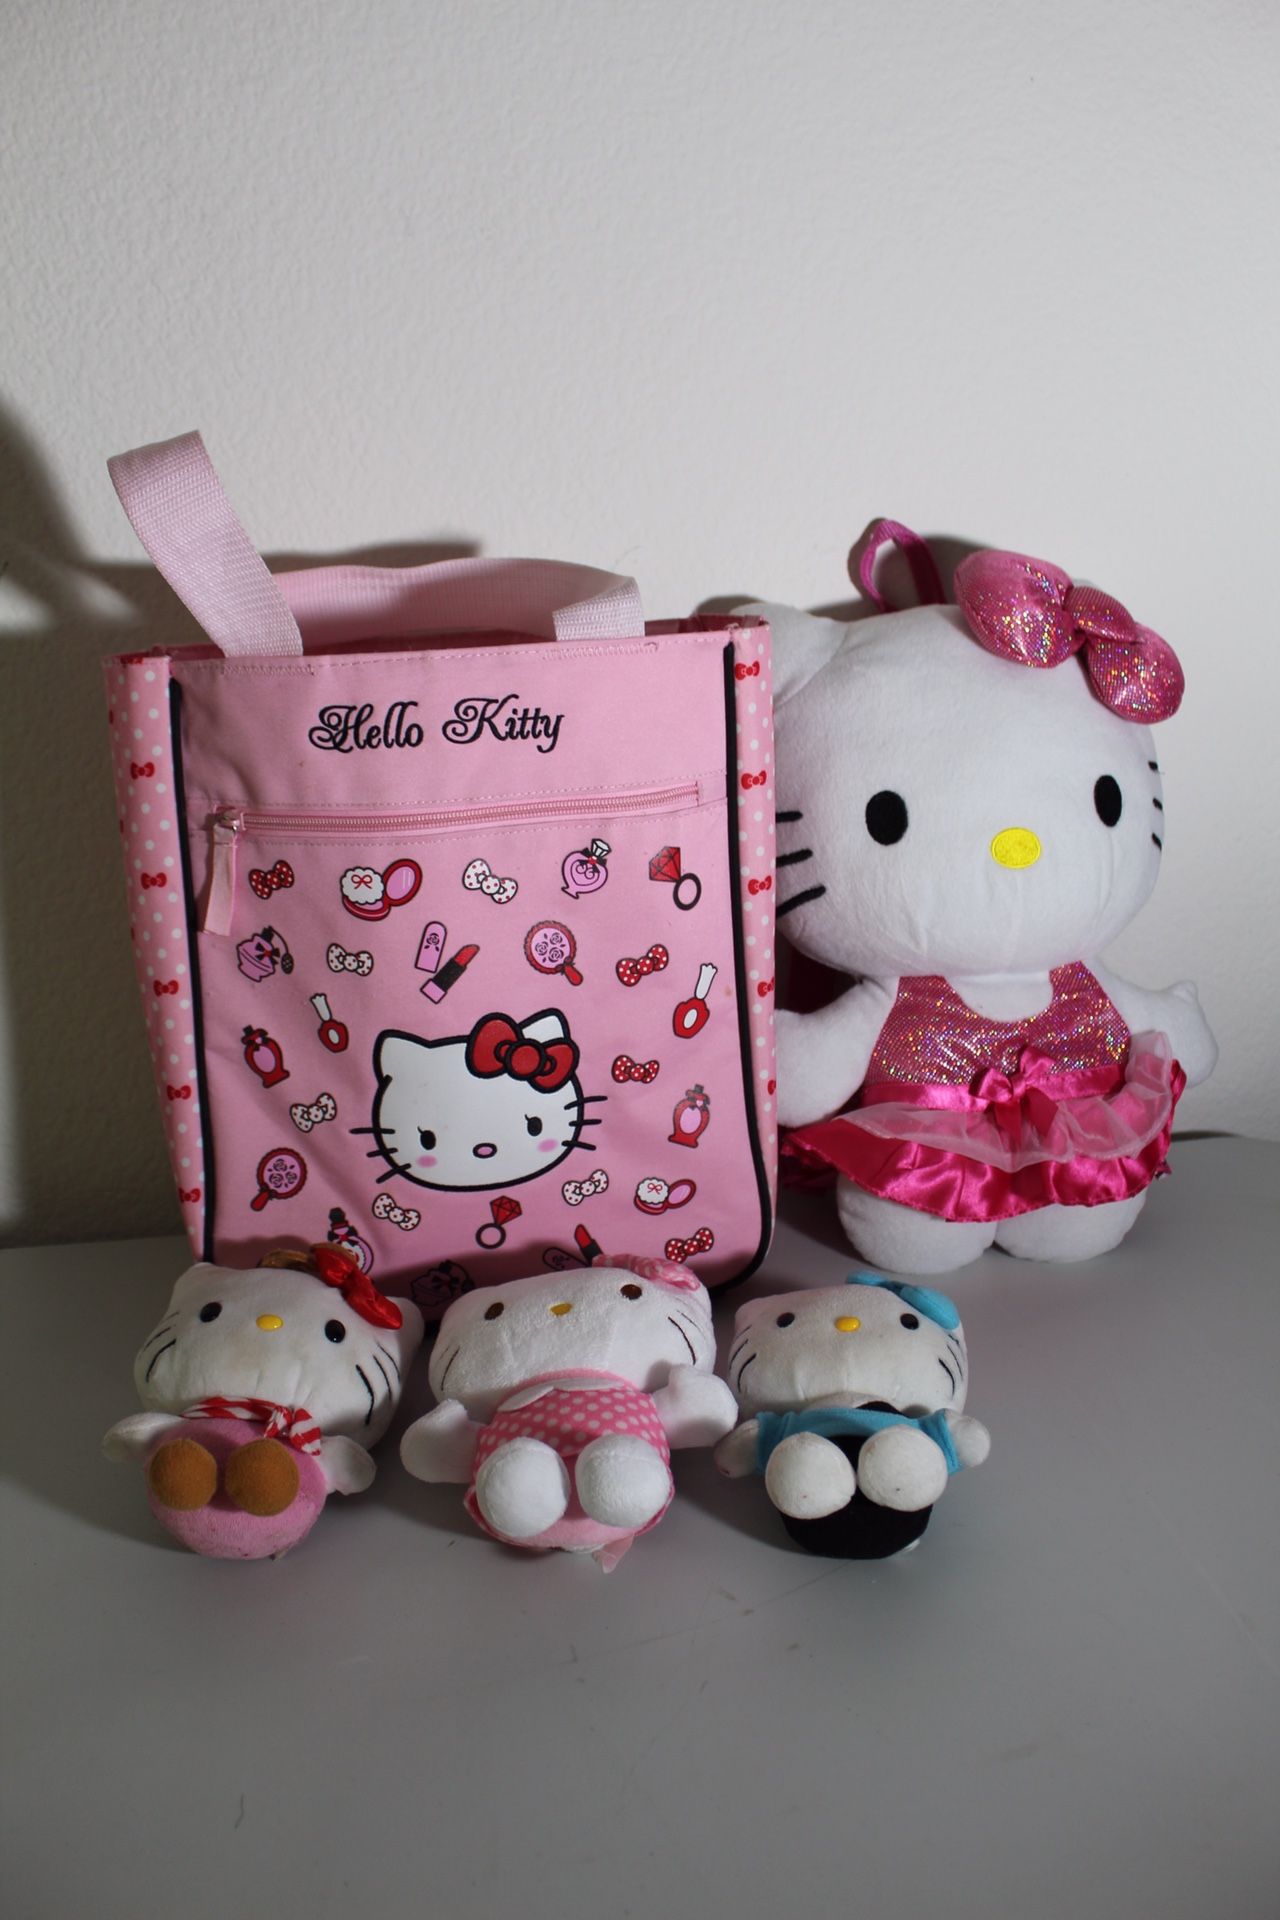 Hello kitty doll and bag